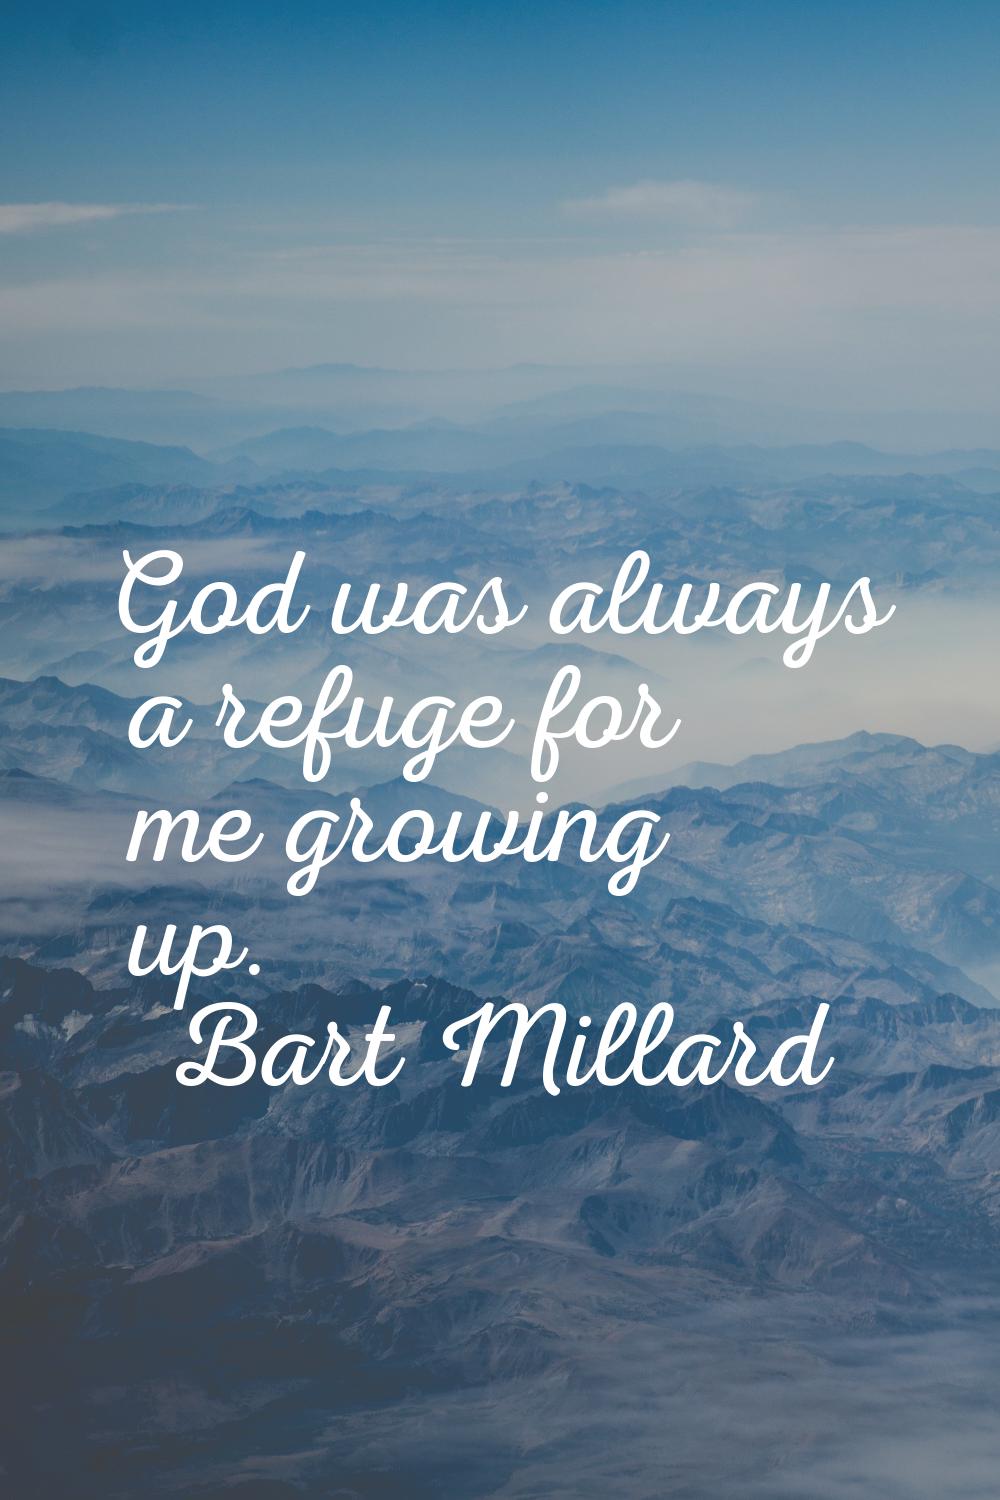 God was always a refuge for me growing up.